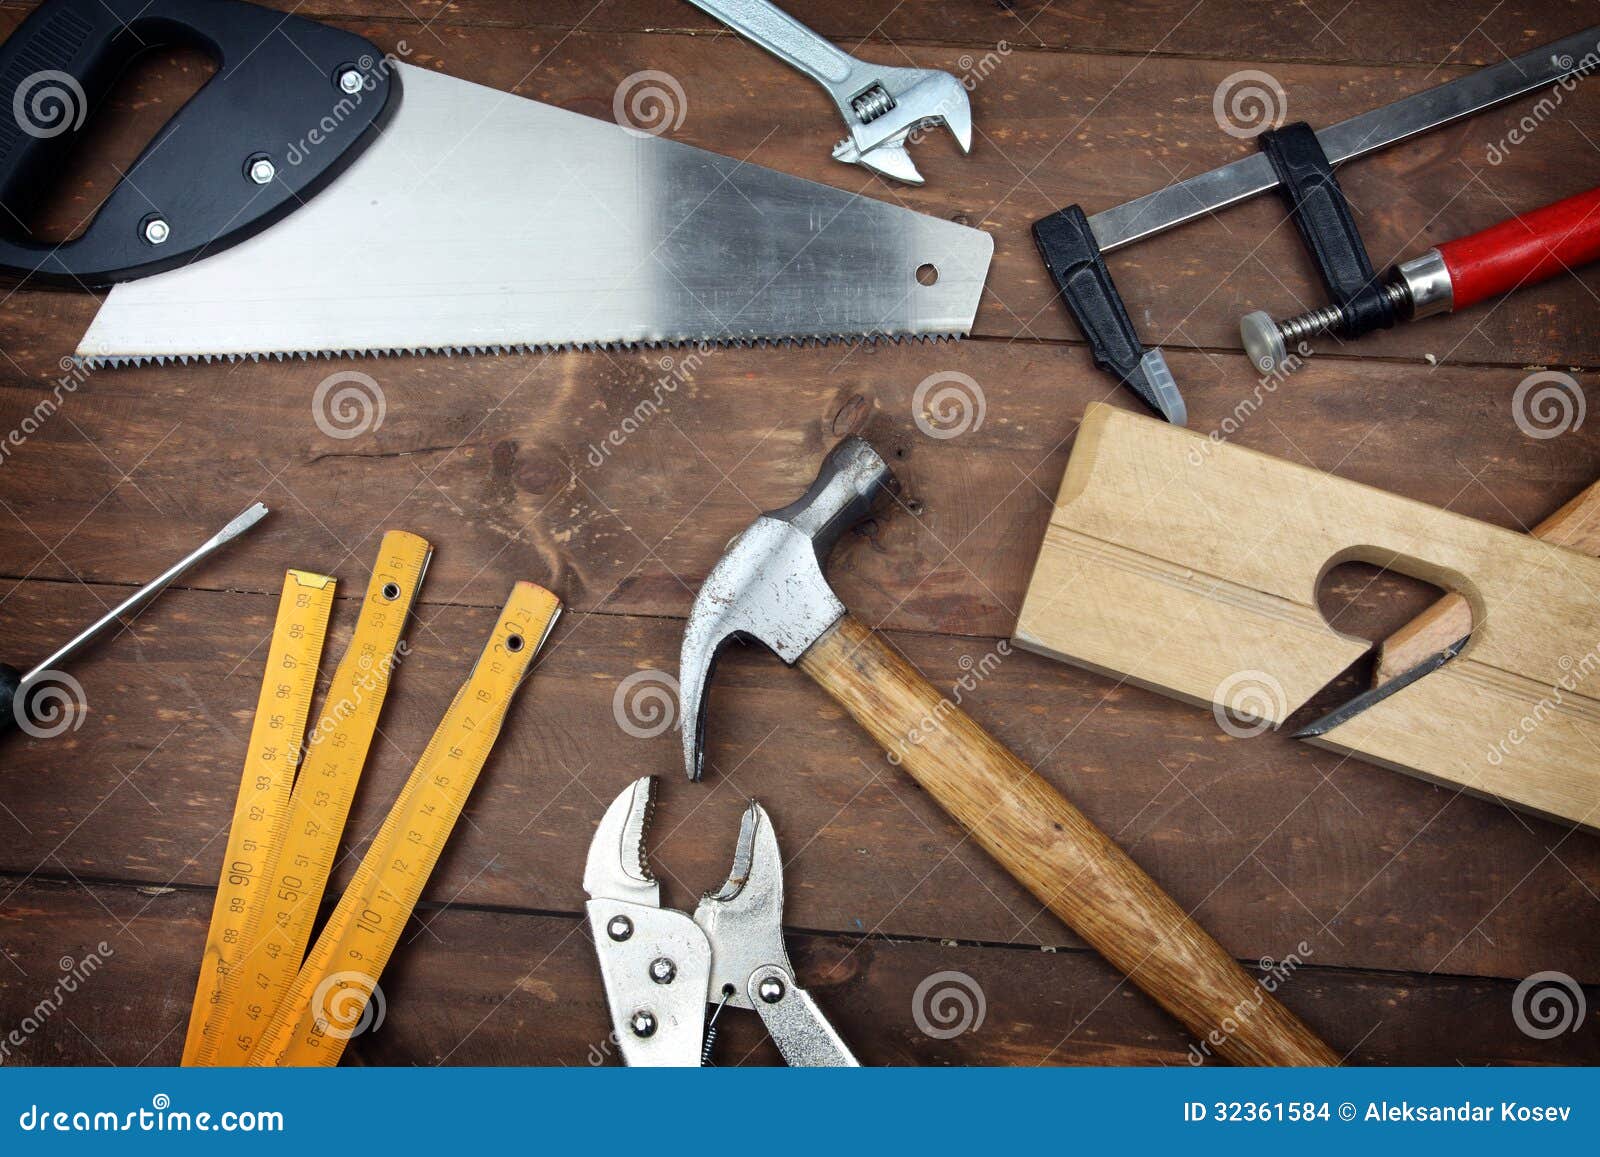 Carpenter's Tools Stock Images - Image: 32361584